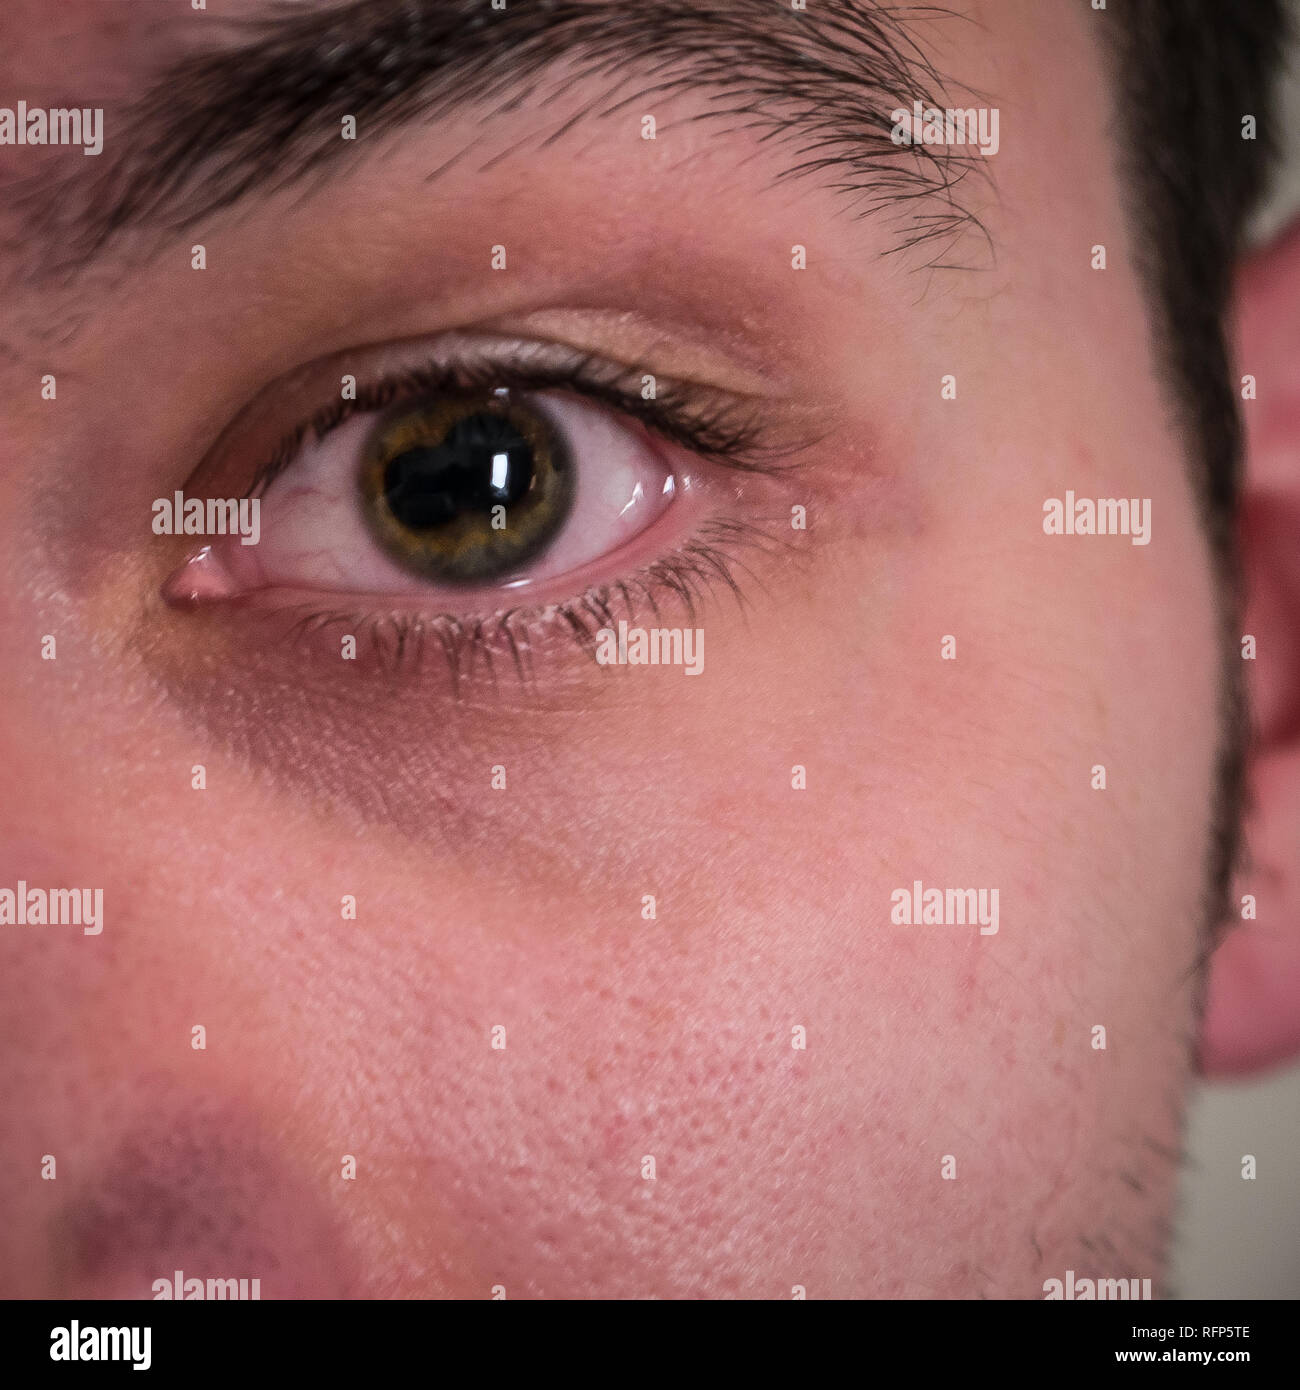 Closeup of male eye with split pupil from iritis / uveitis eye disease Stock Photo